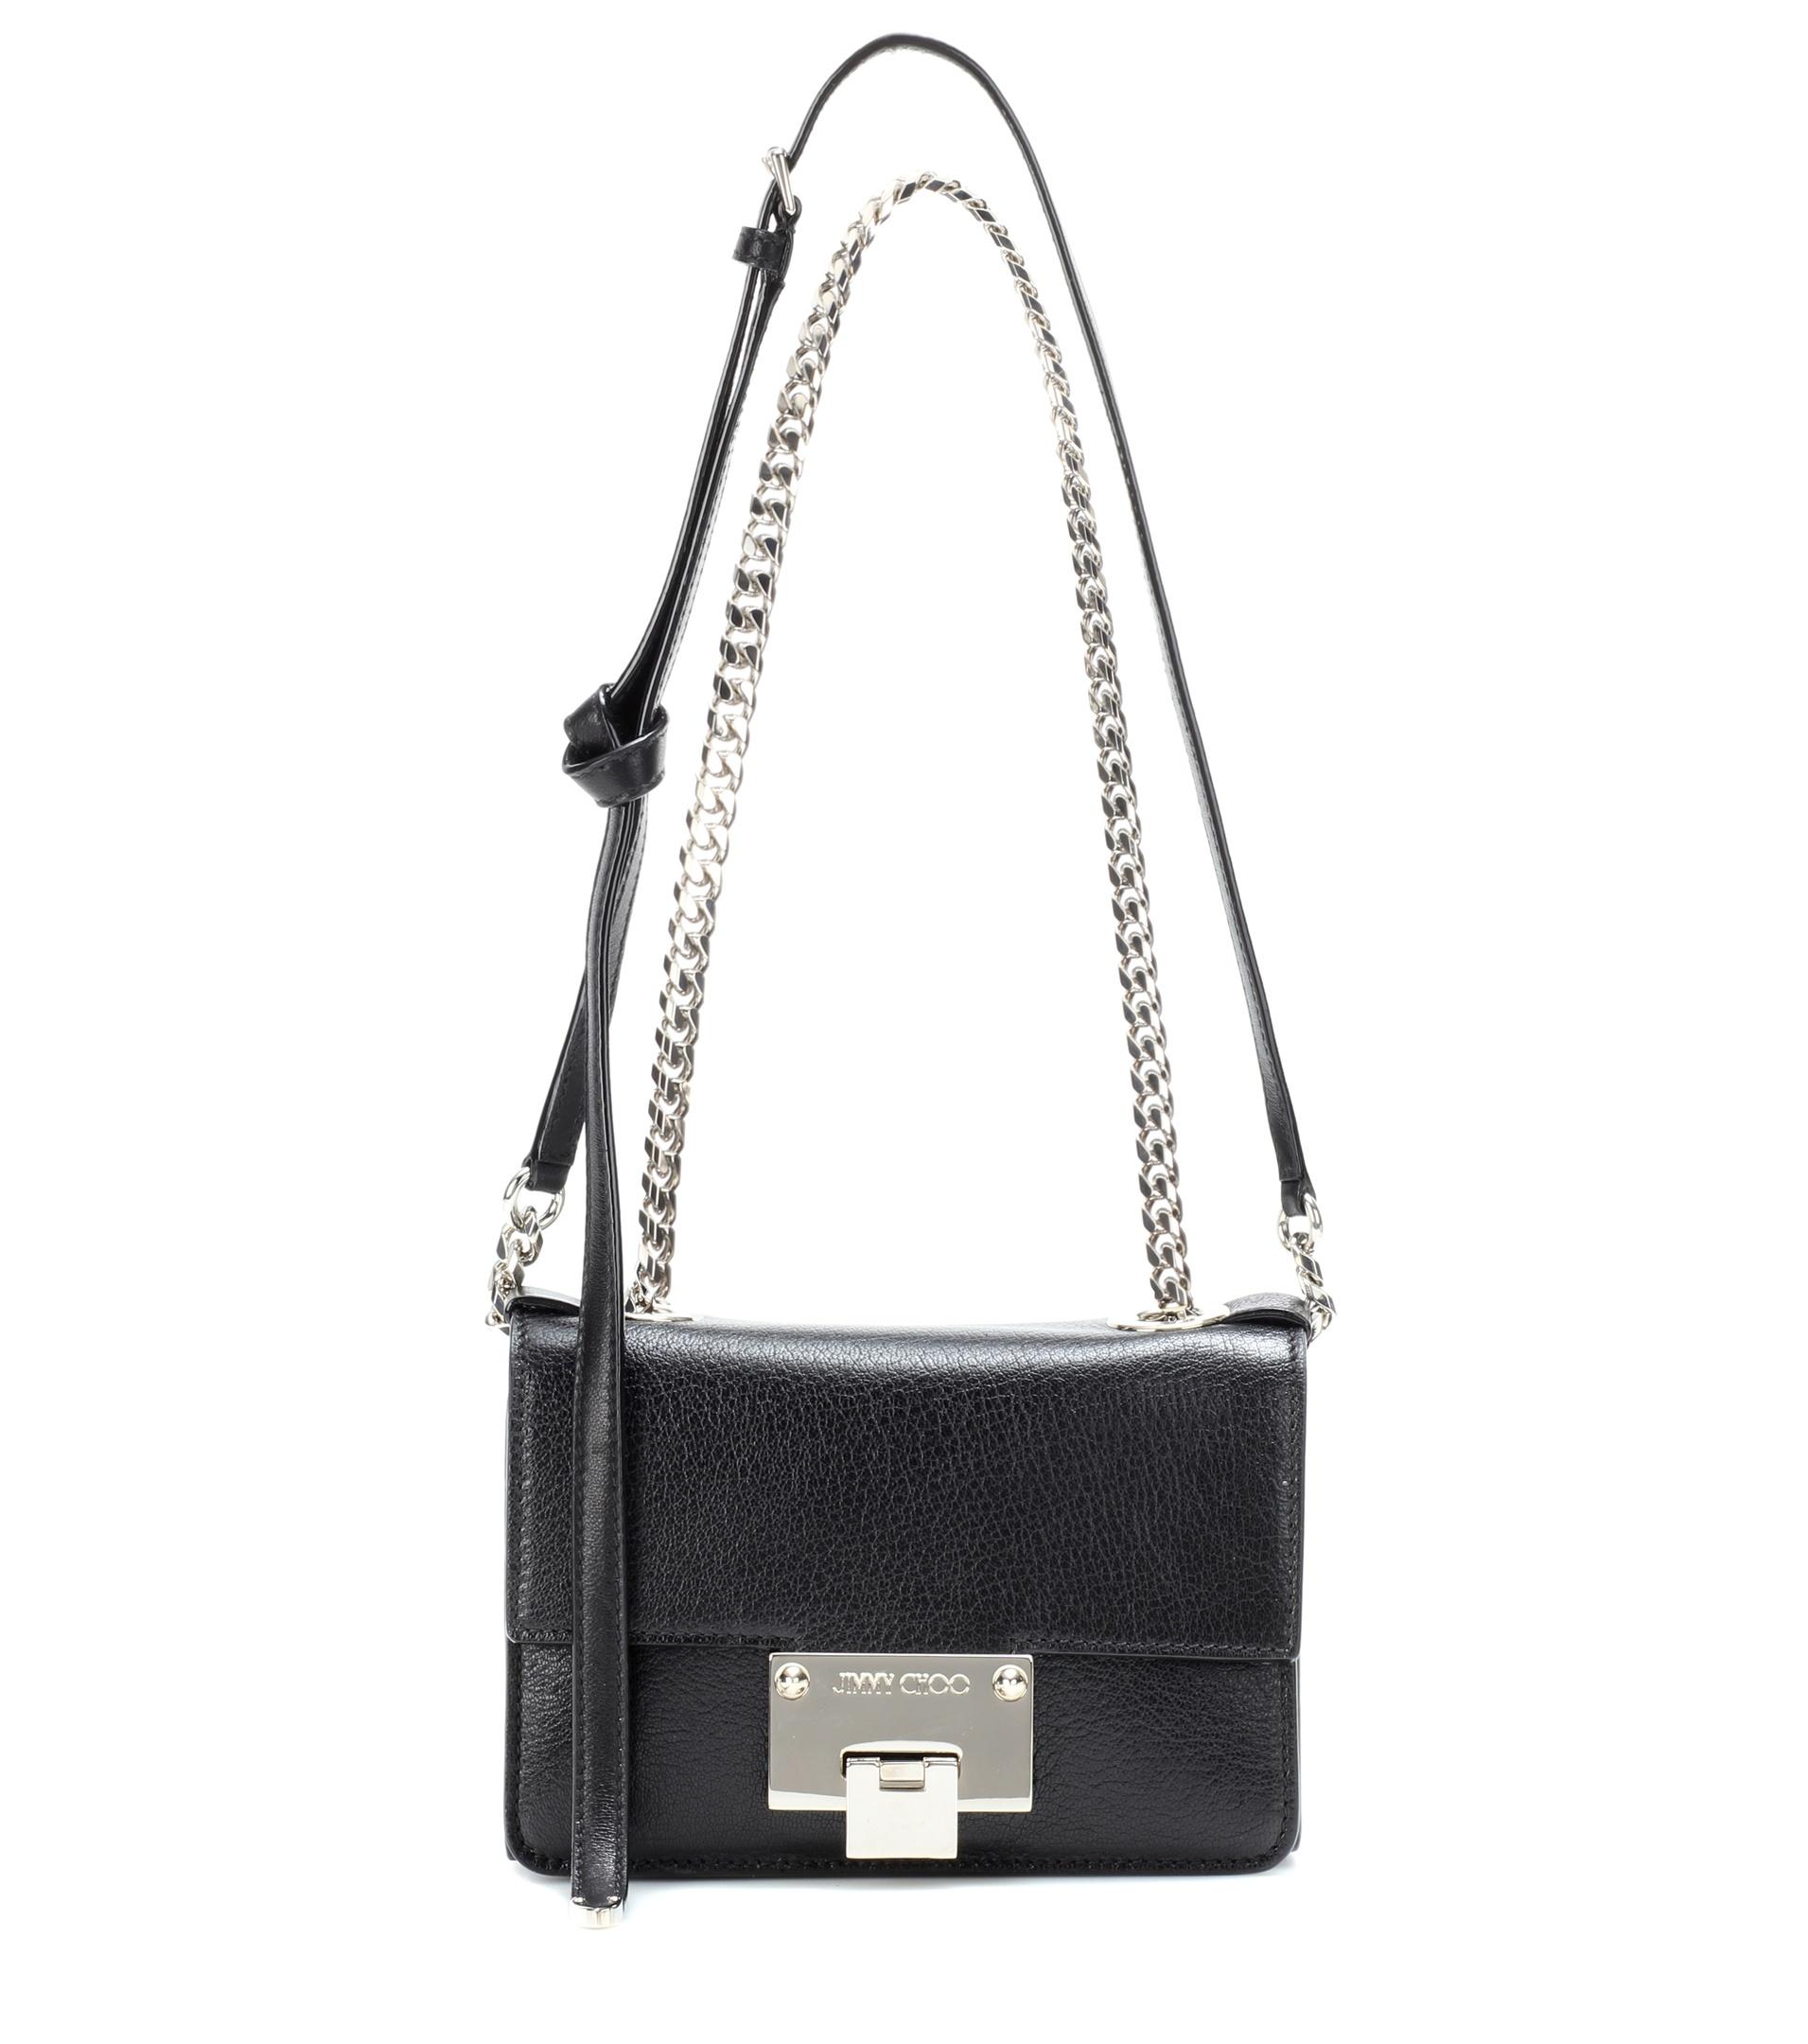 Lyst - Jimmy Choo Rebel Soft Mini Leather Shoulder Bag in Black - Save 4%